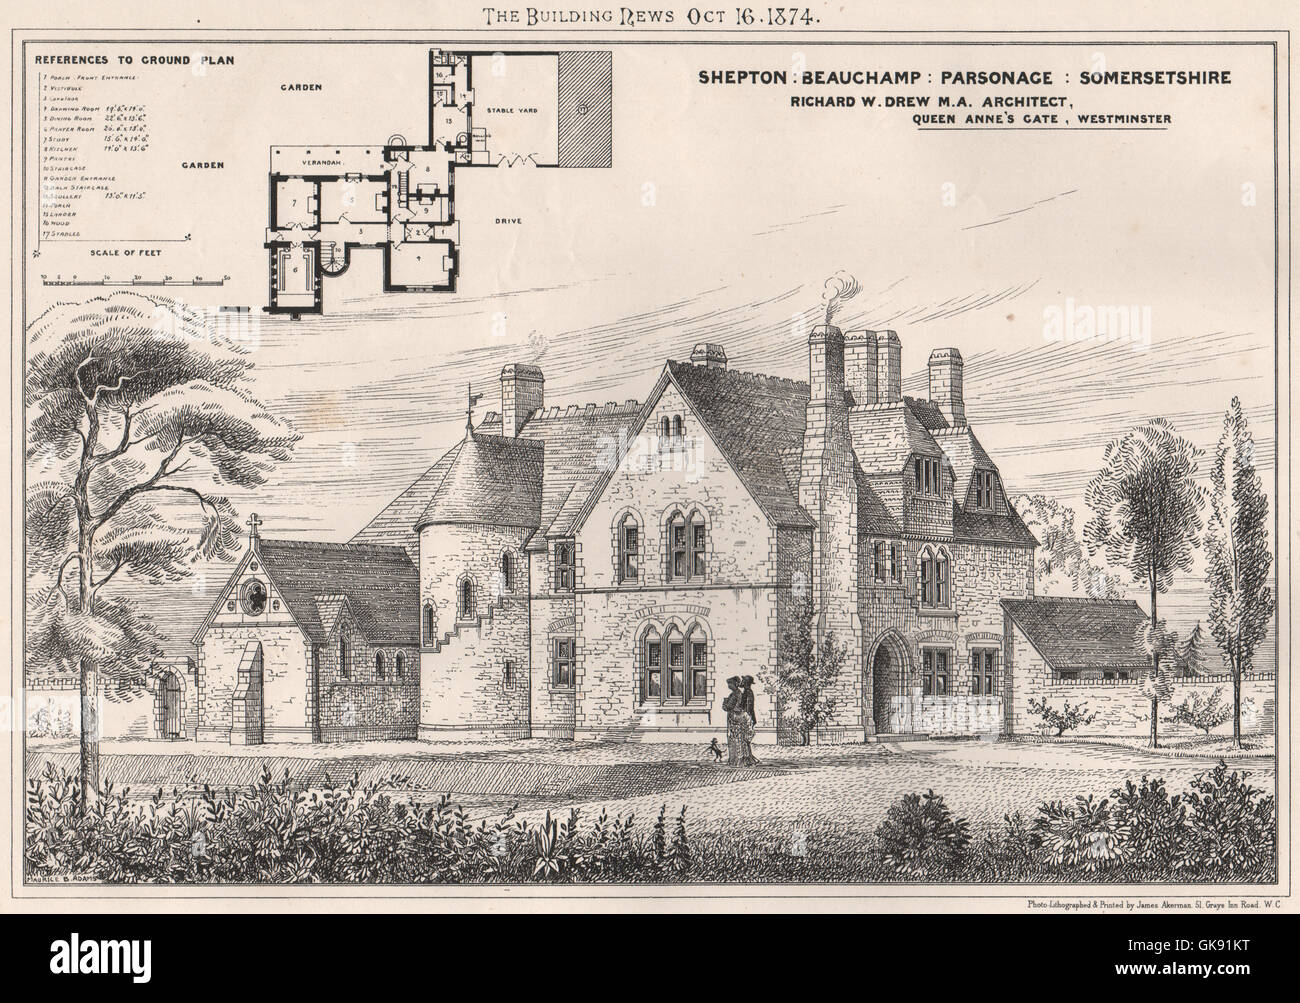 Shepton Beauchamp Parsonage, Somerset; Richard W. Drew M.A. Architect, 1874 Stock Photo